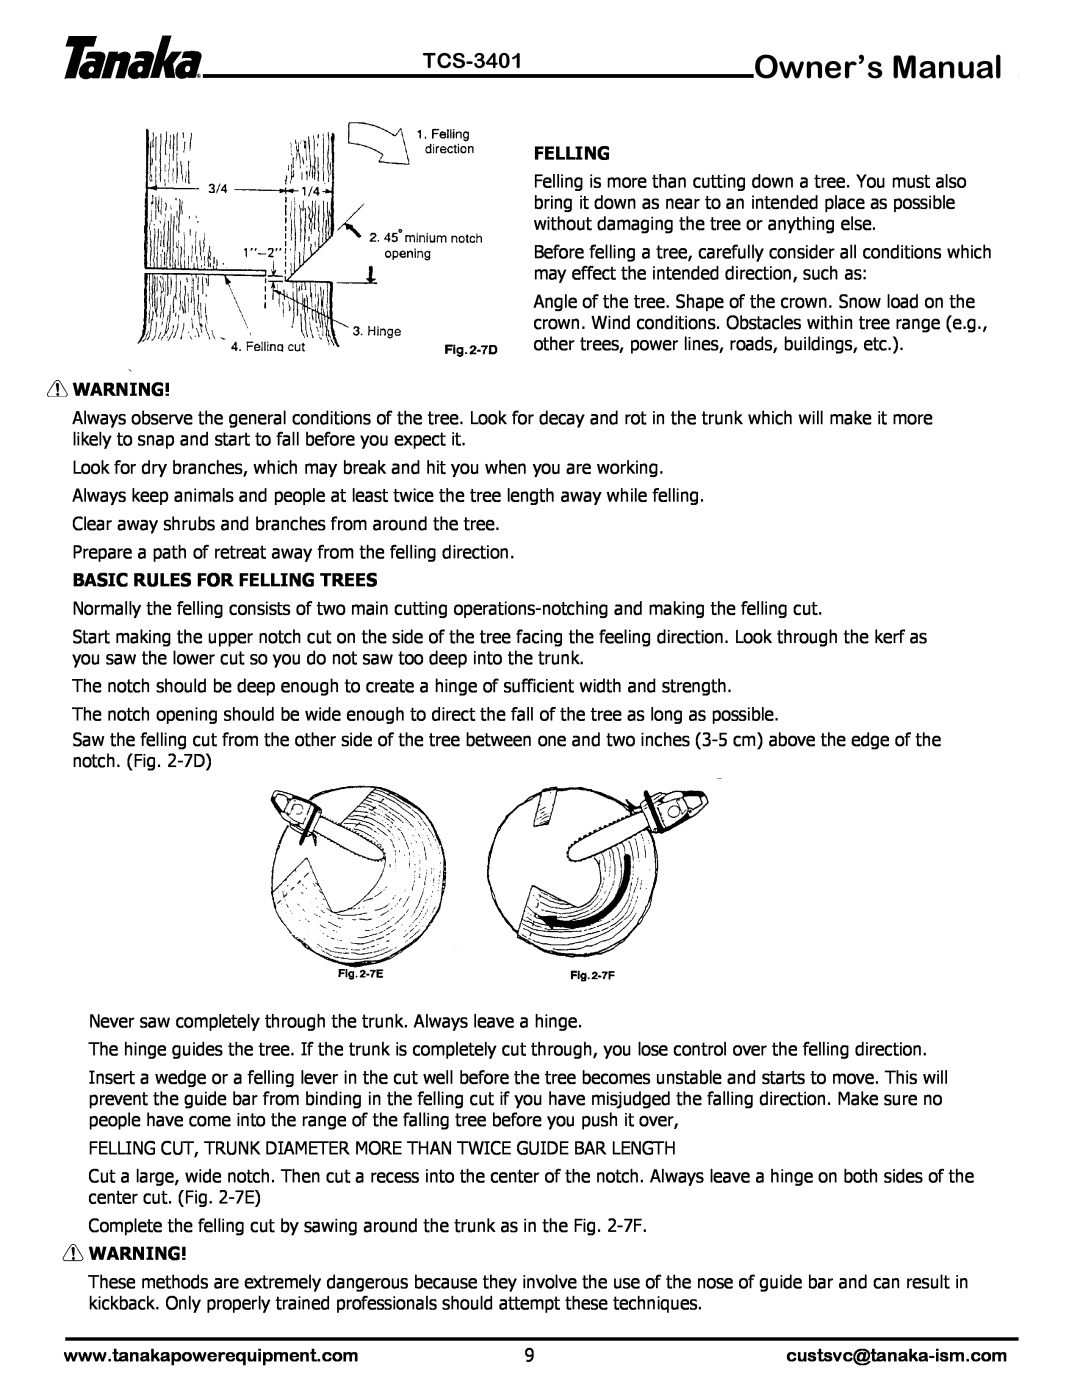 Tanaka TCS-3401 manual Basic Rules For Felling Trees 